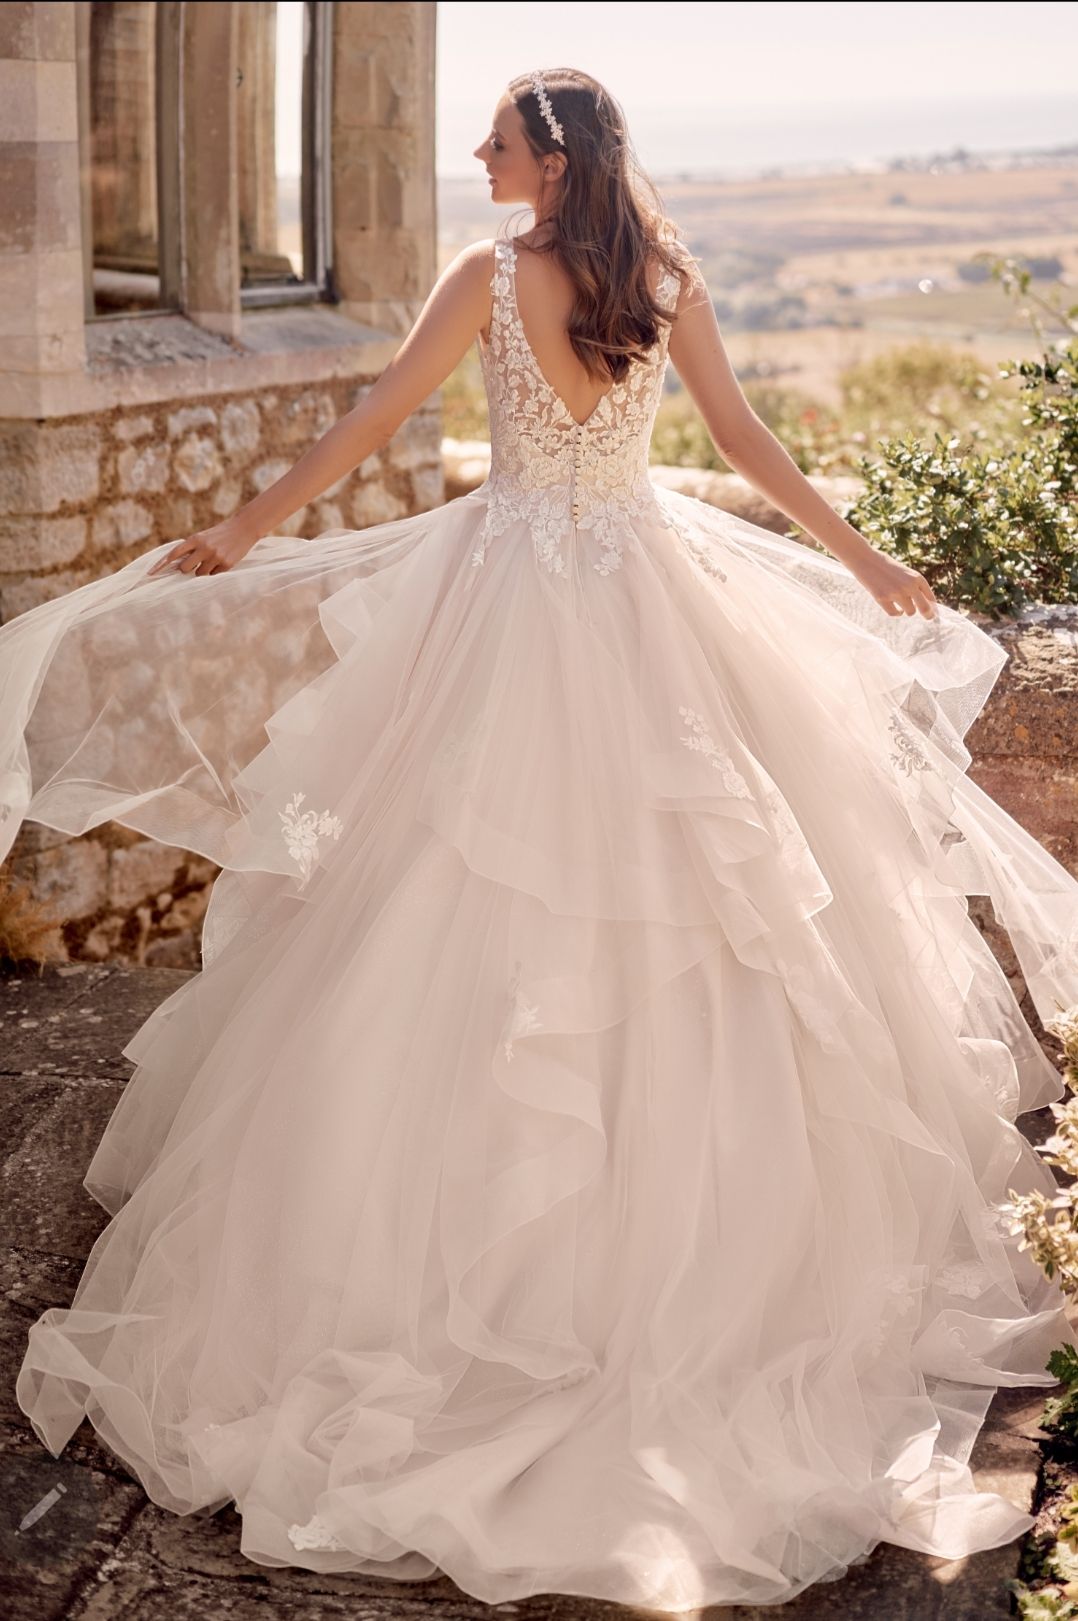 Best Dress 2 Impress Bridal-Image-29